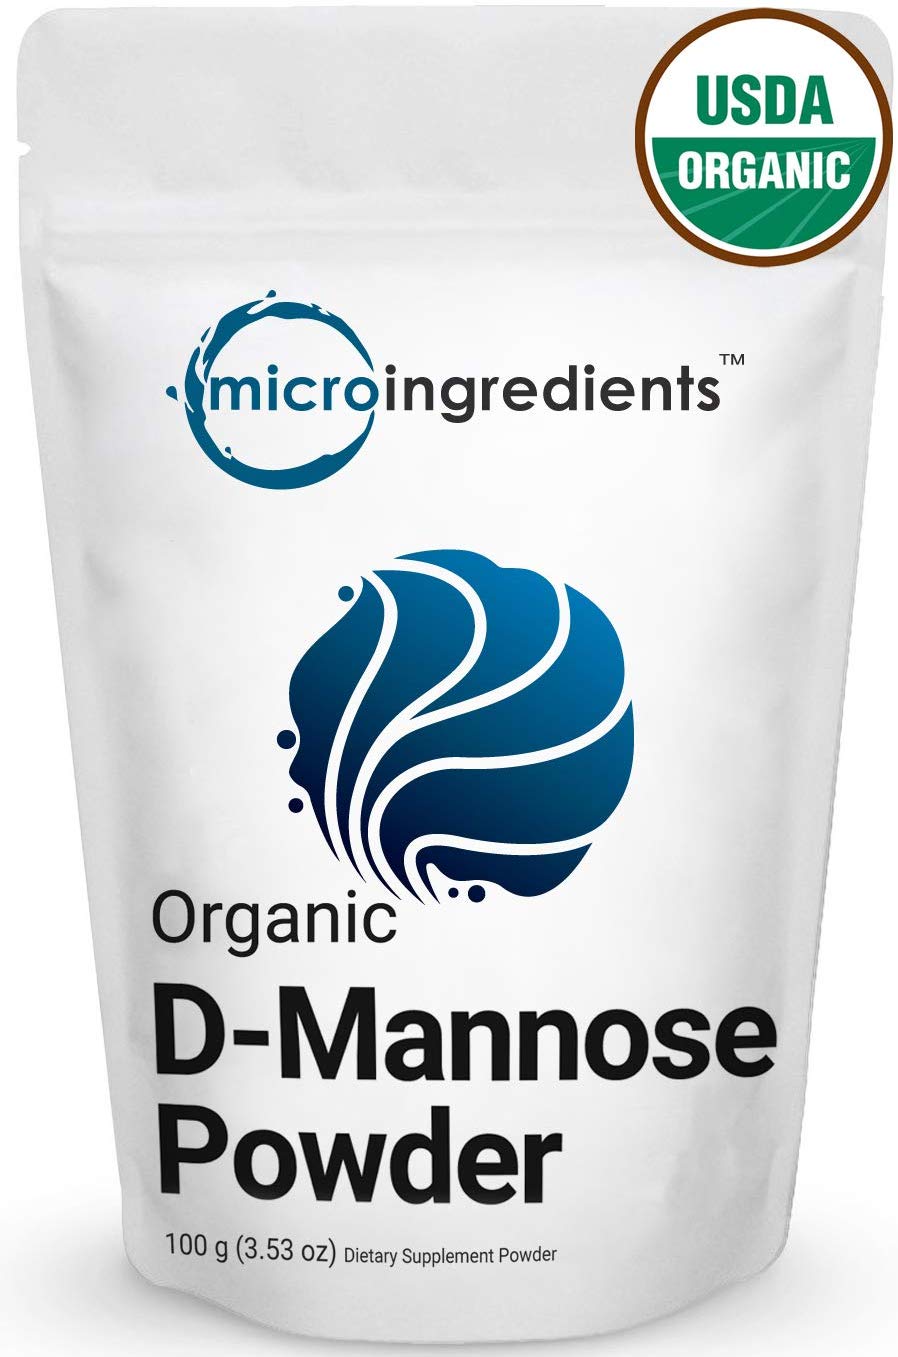 Organic D-Mannose dmannose powder 100 Grams, …